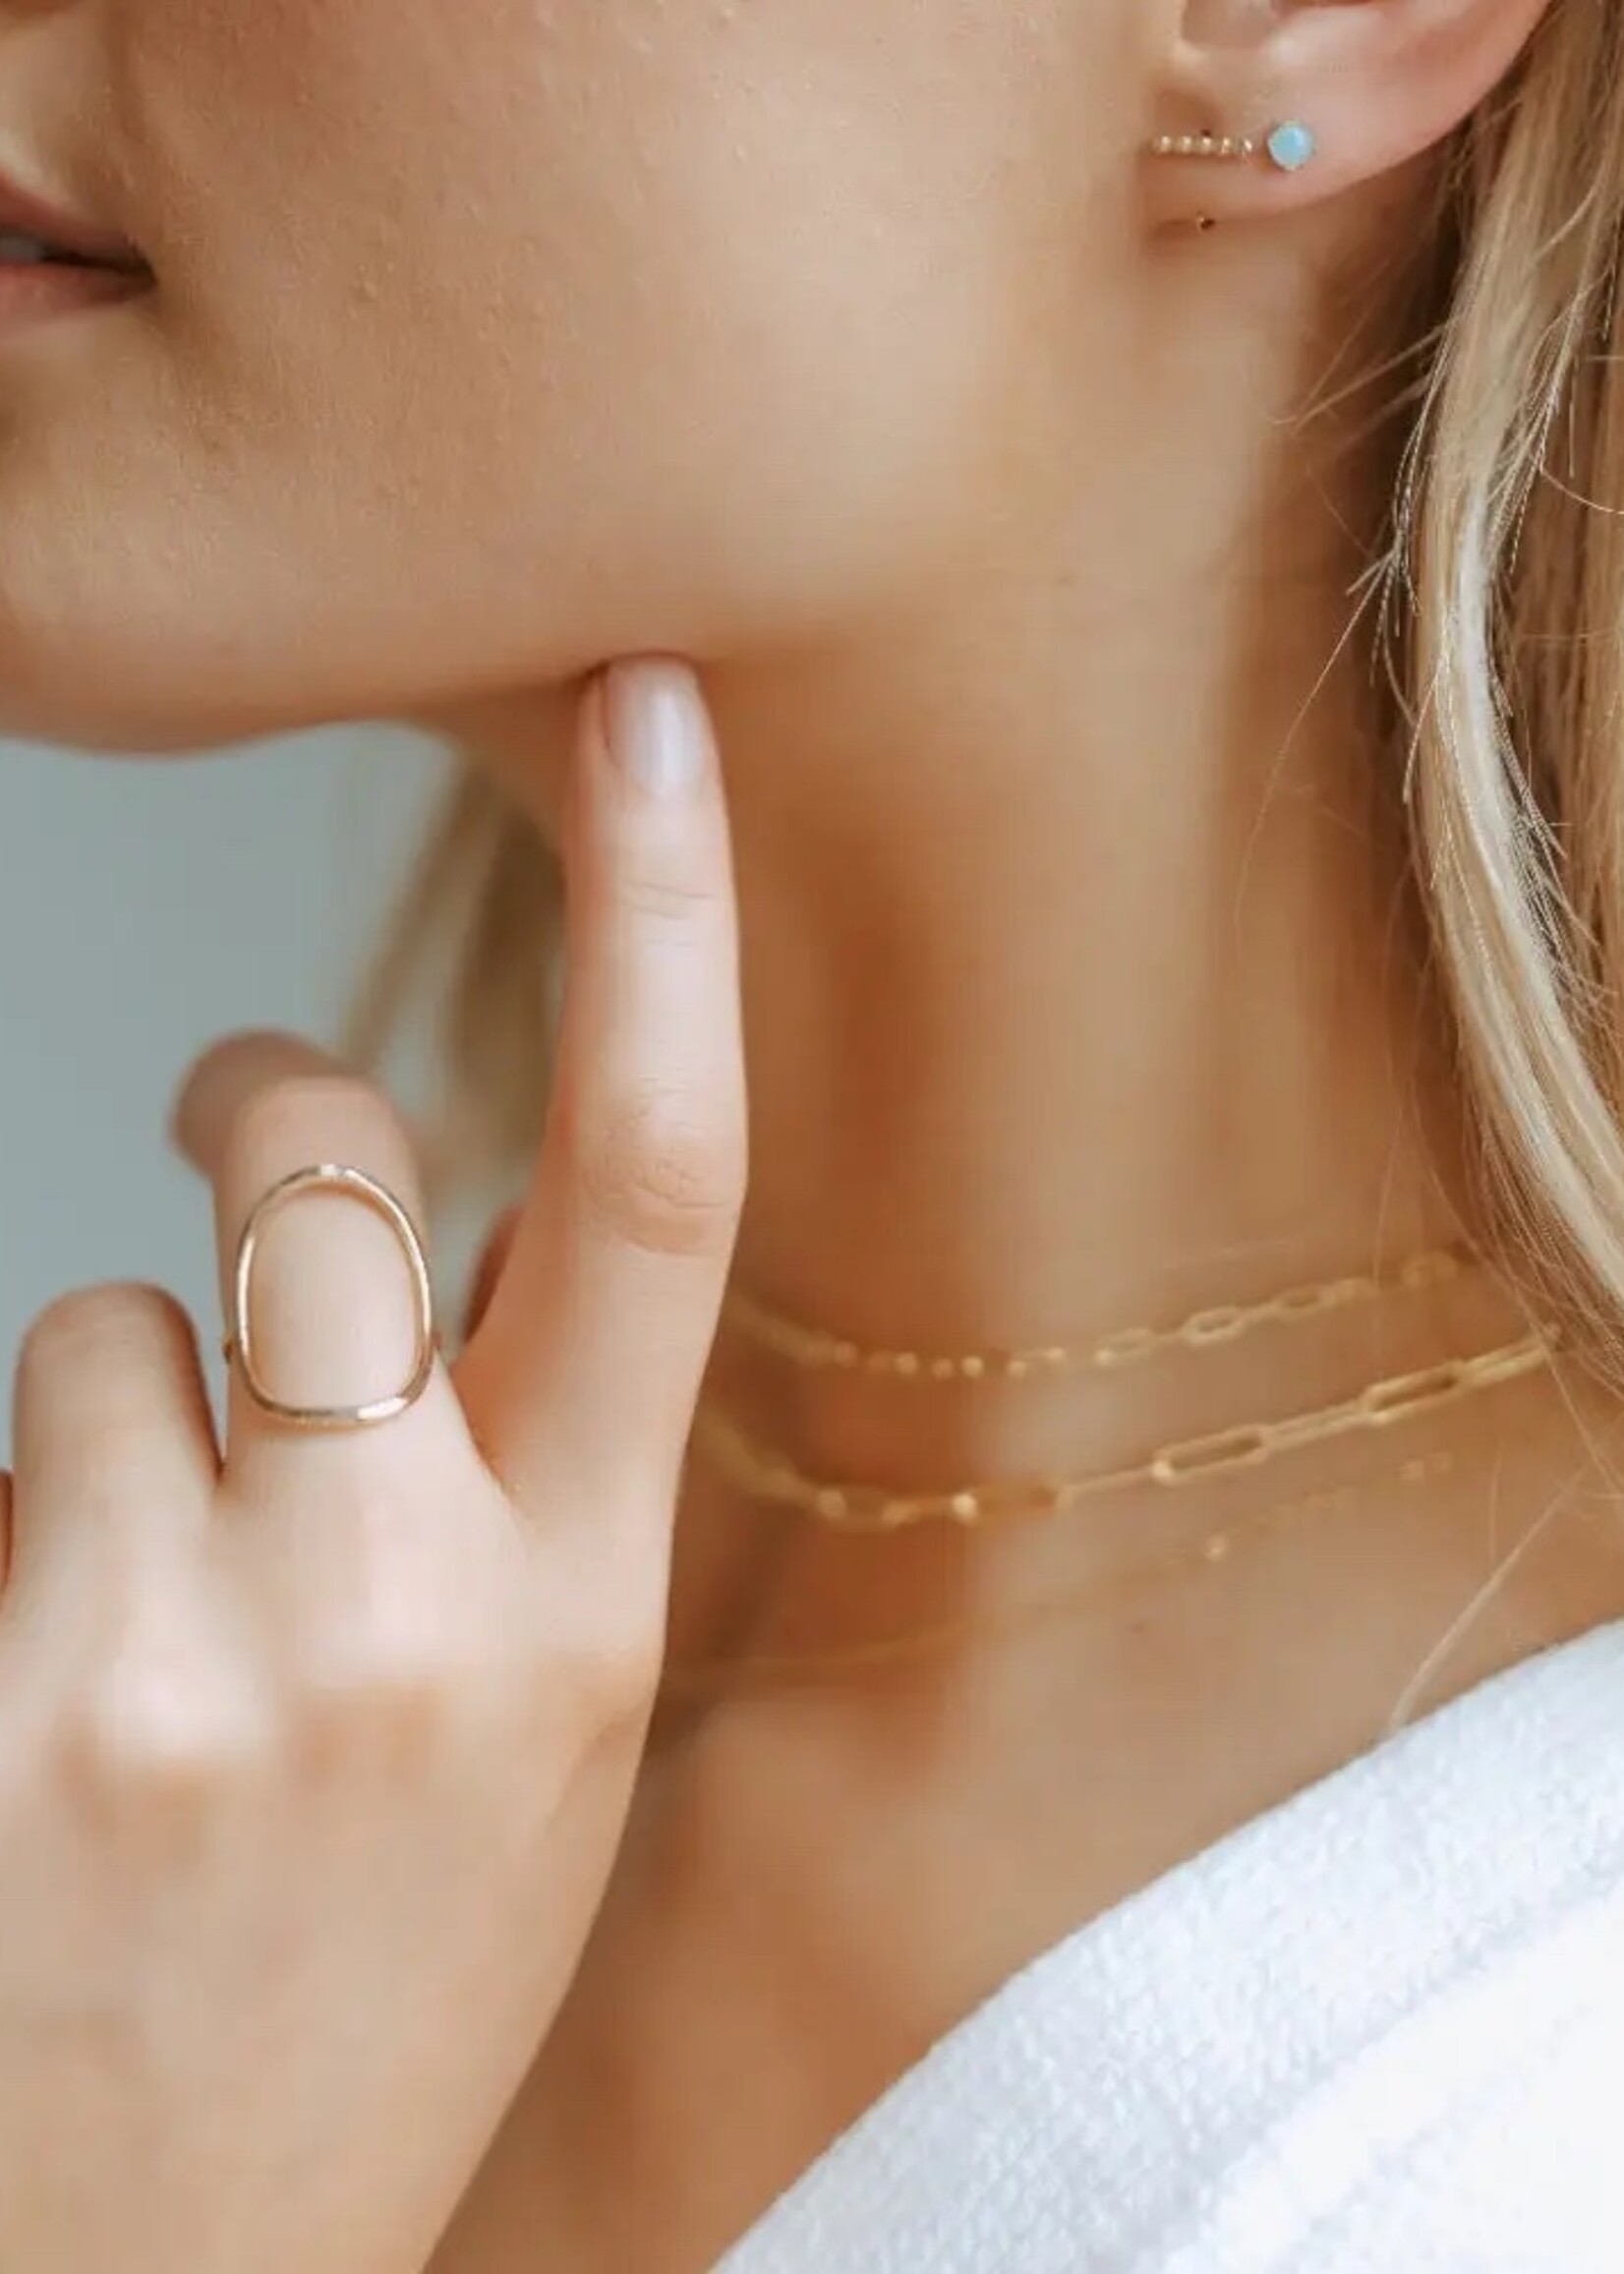 Token Jewelry Olivia Ring